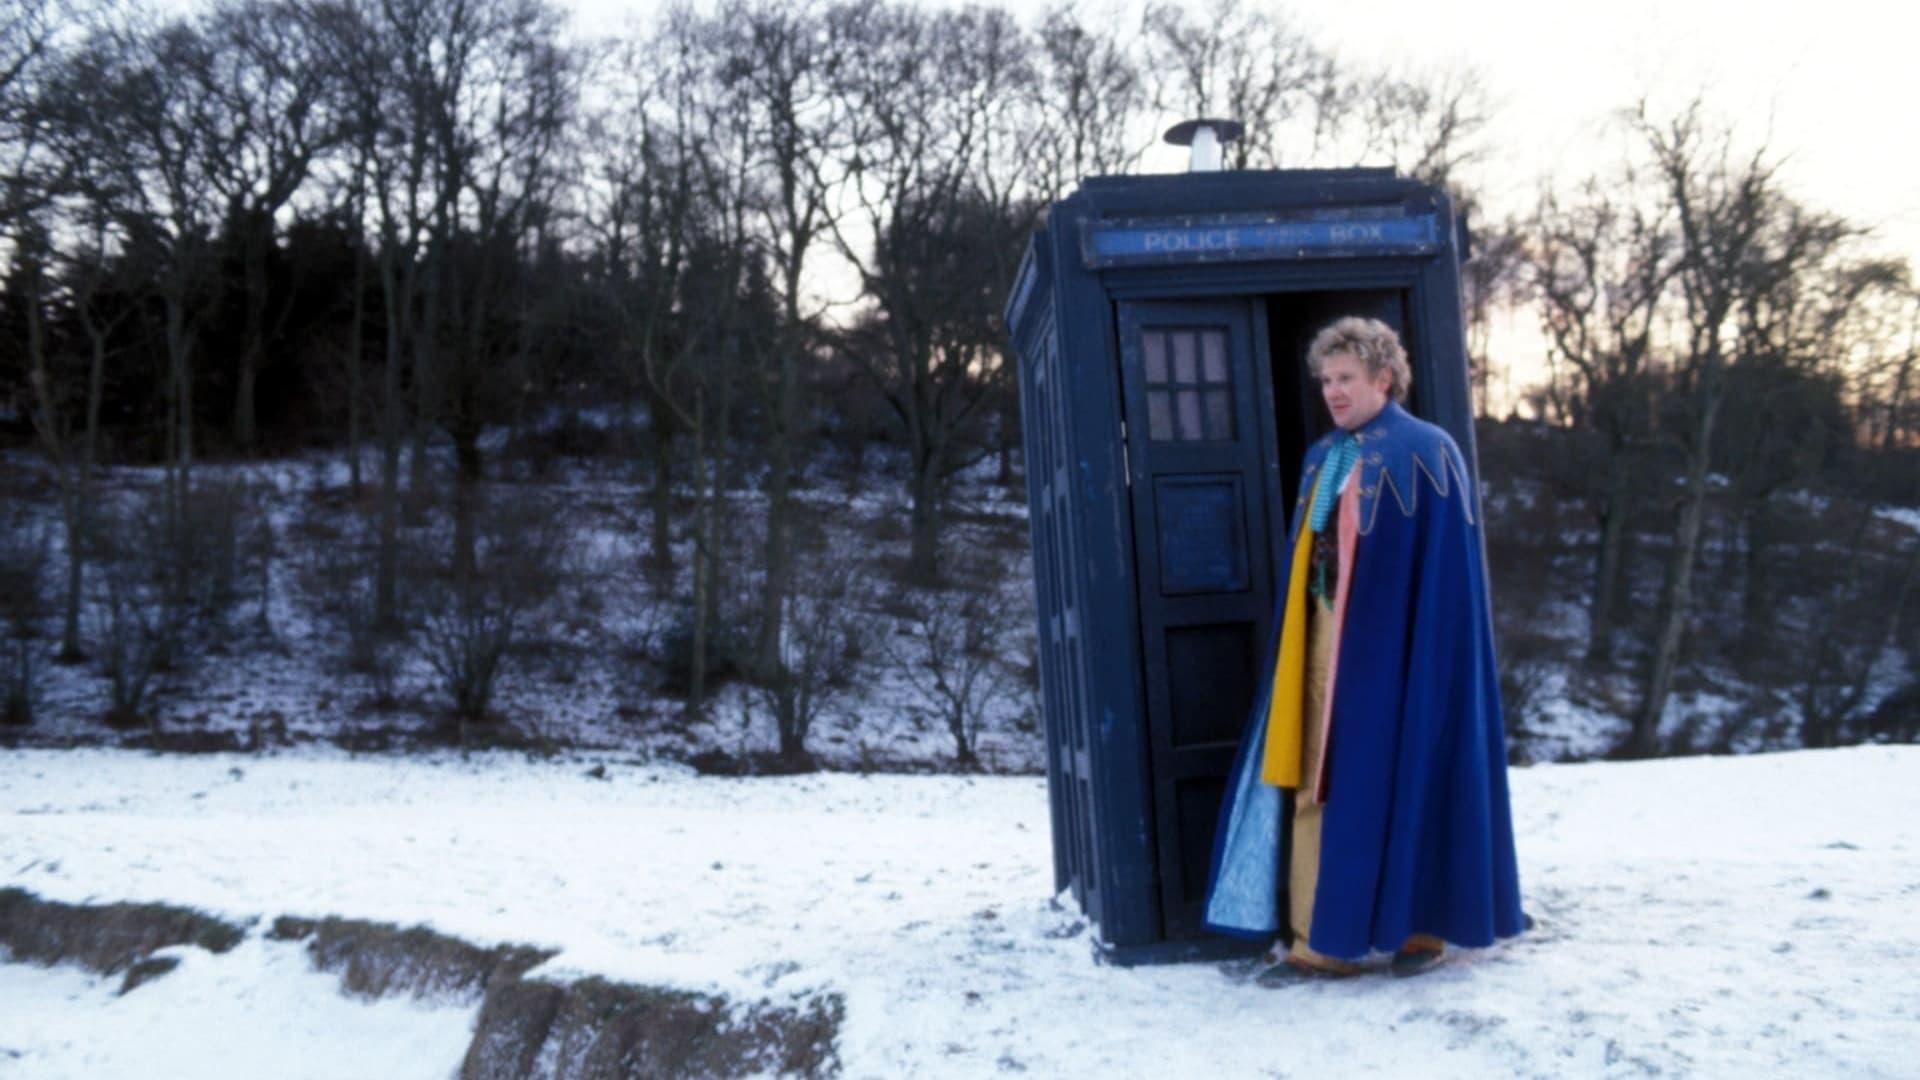 Doctor Who: Revelation of the Daleks backdrop